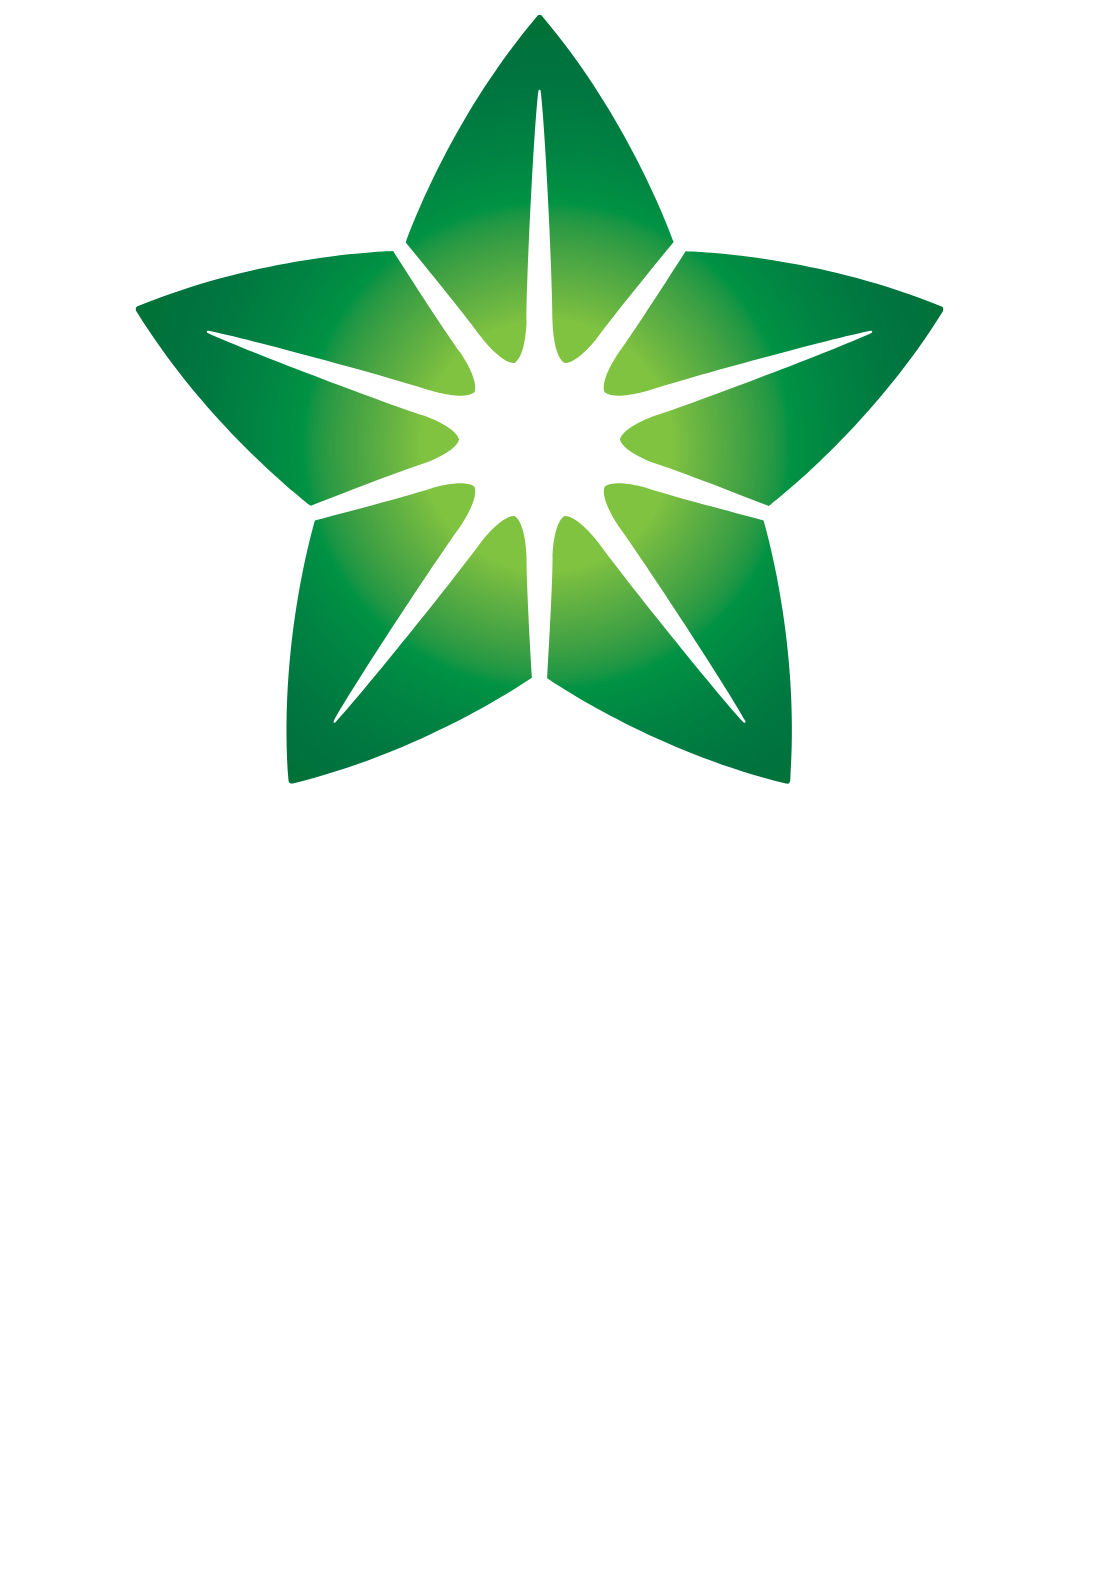 Qatar Fuel Company (WOQOD) logo large for dark backgrounds (transparent PNG)